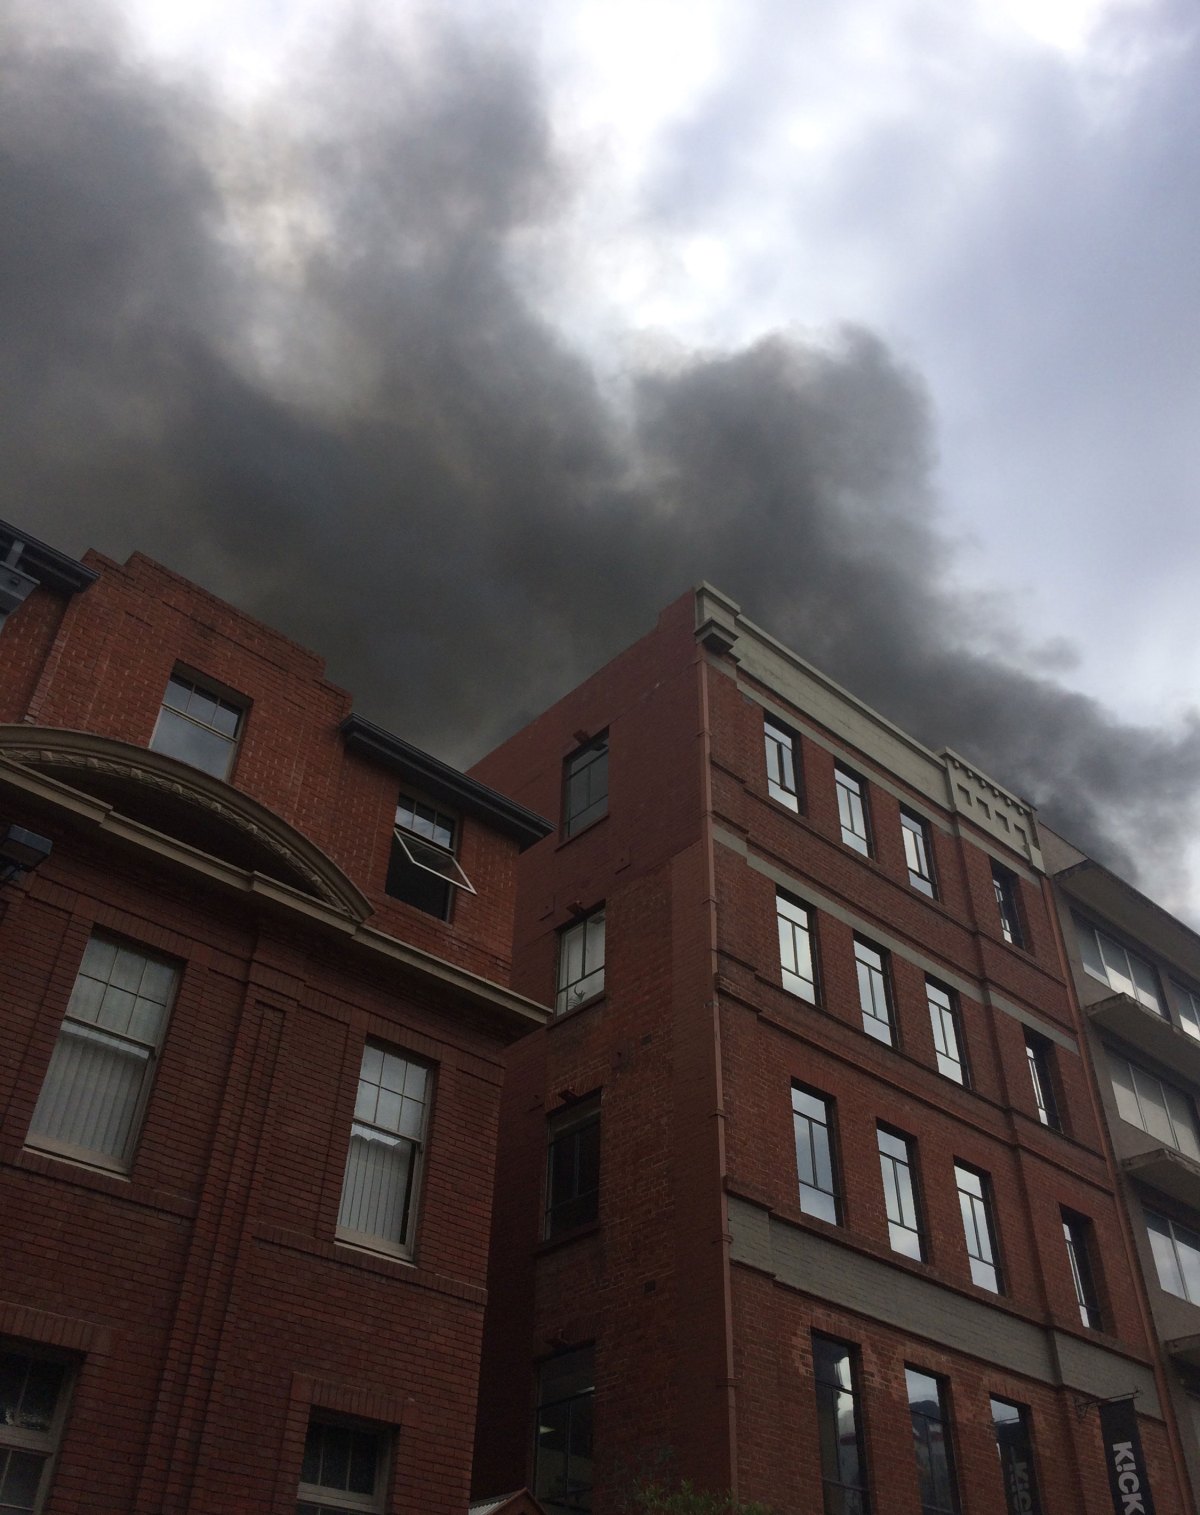 Smoke rises above Leigh St.